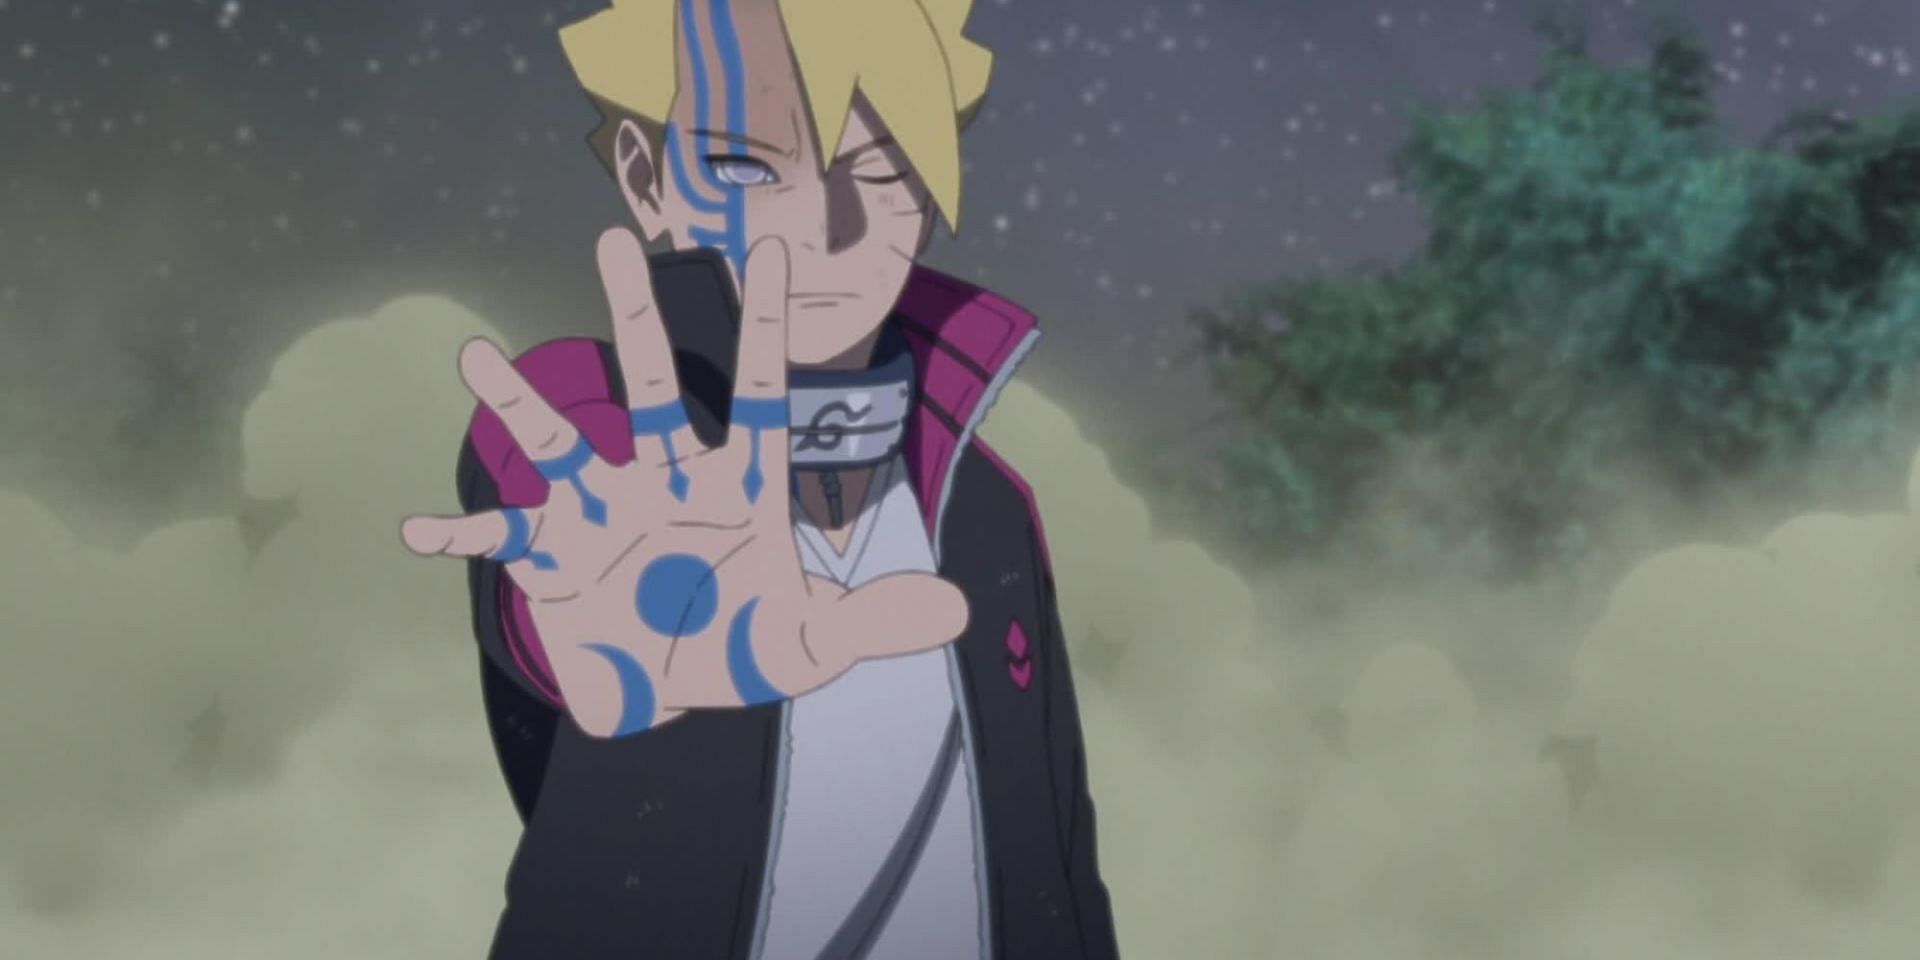 Boruto: Naruto Next Generations' Filler List: What to Skip? (2023